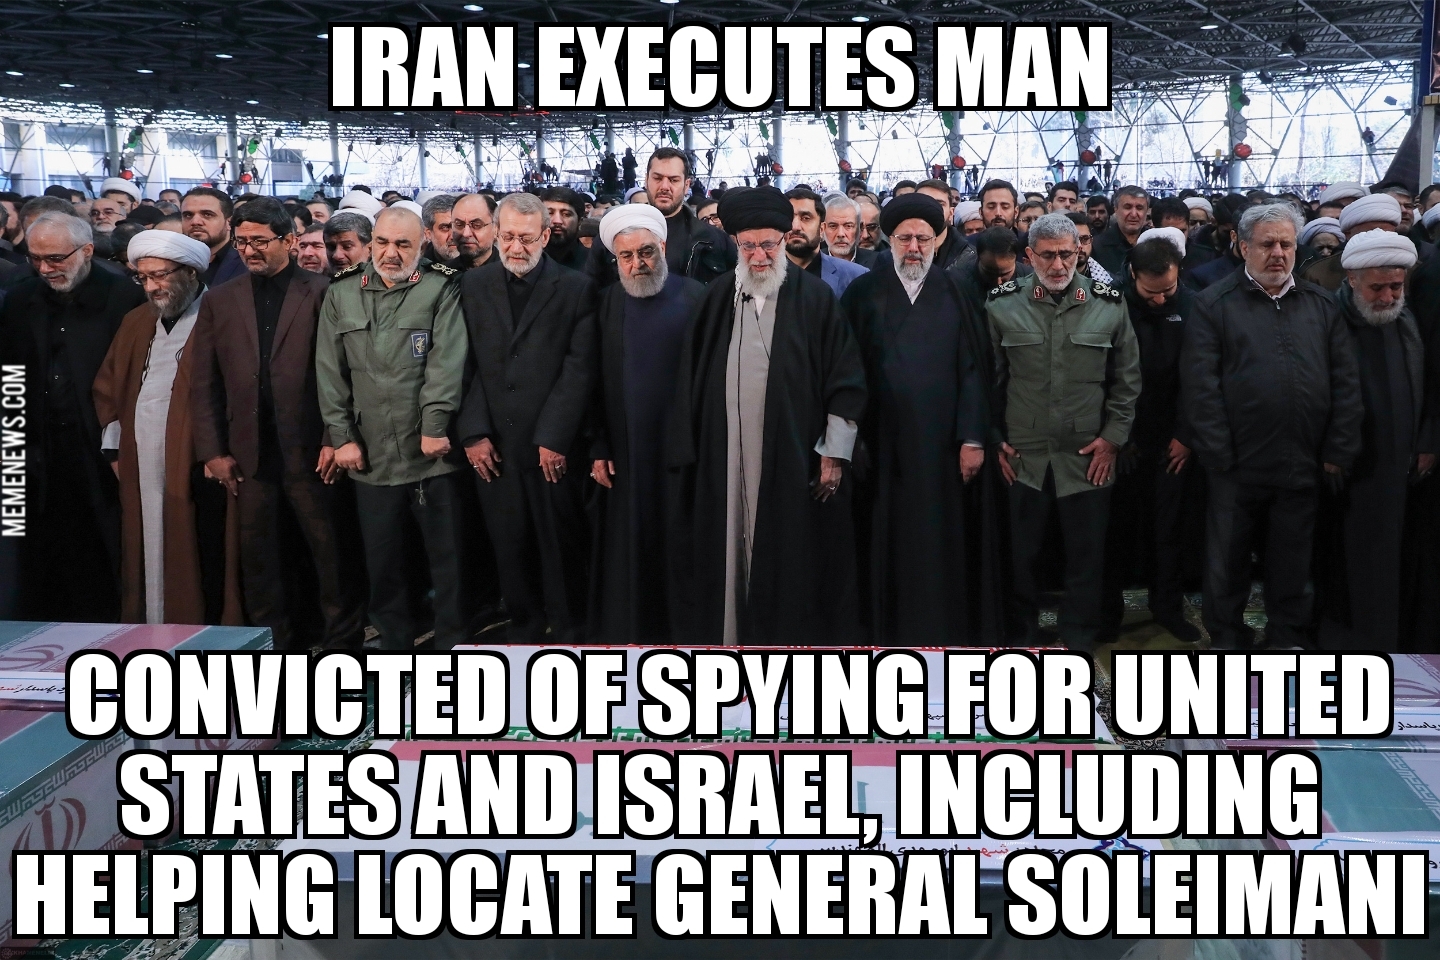 Iran executes man for spying, locating Soleimani